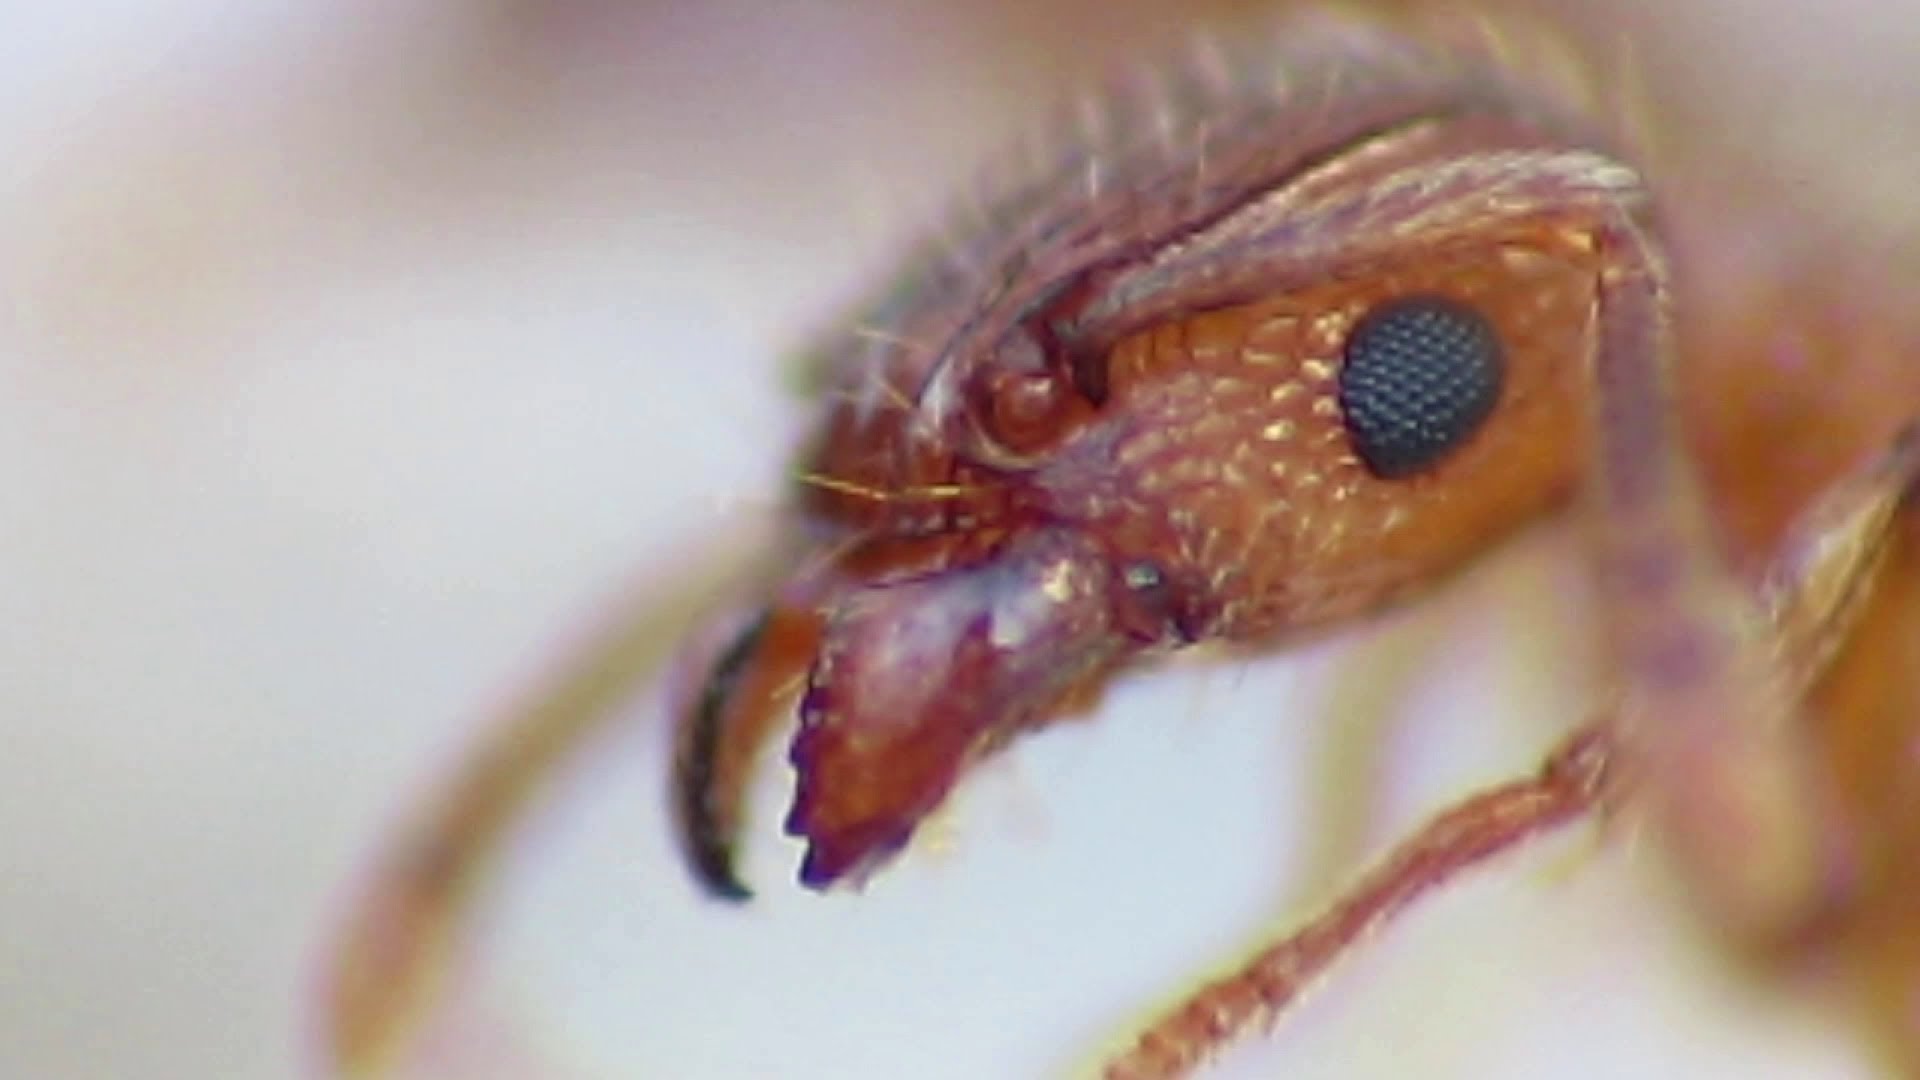 Ants eating Extreme Close Up - YouTube